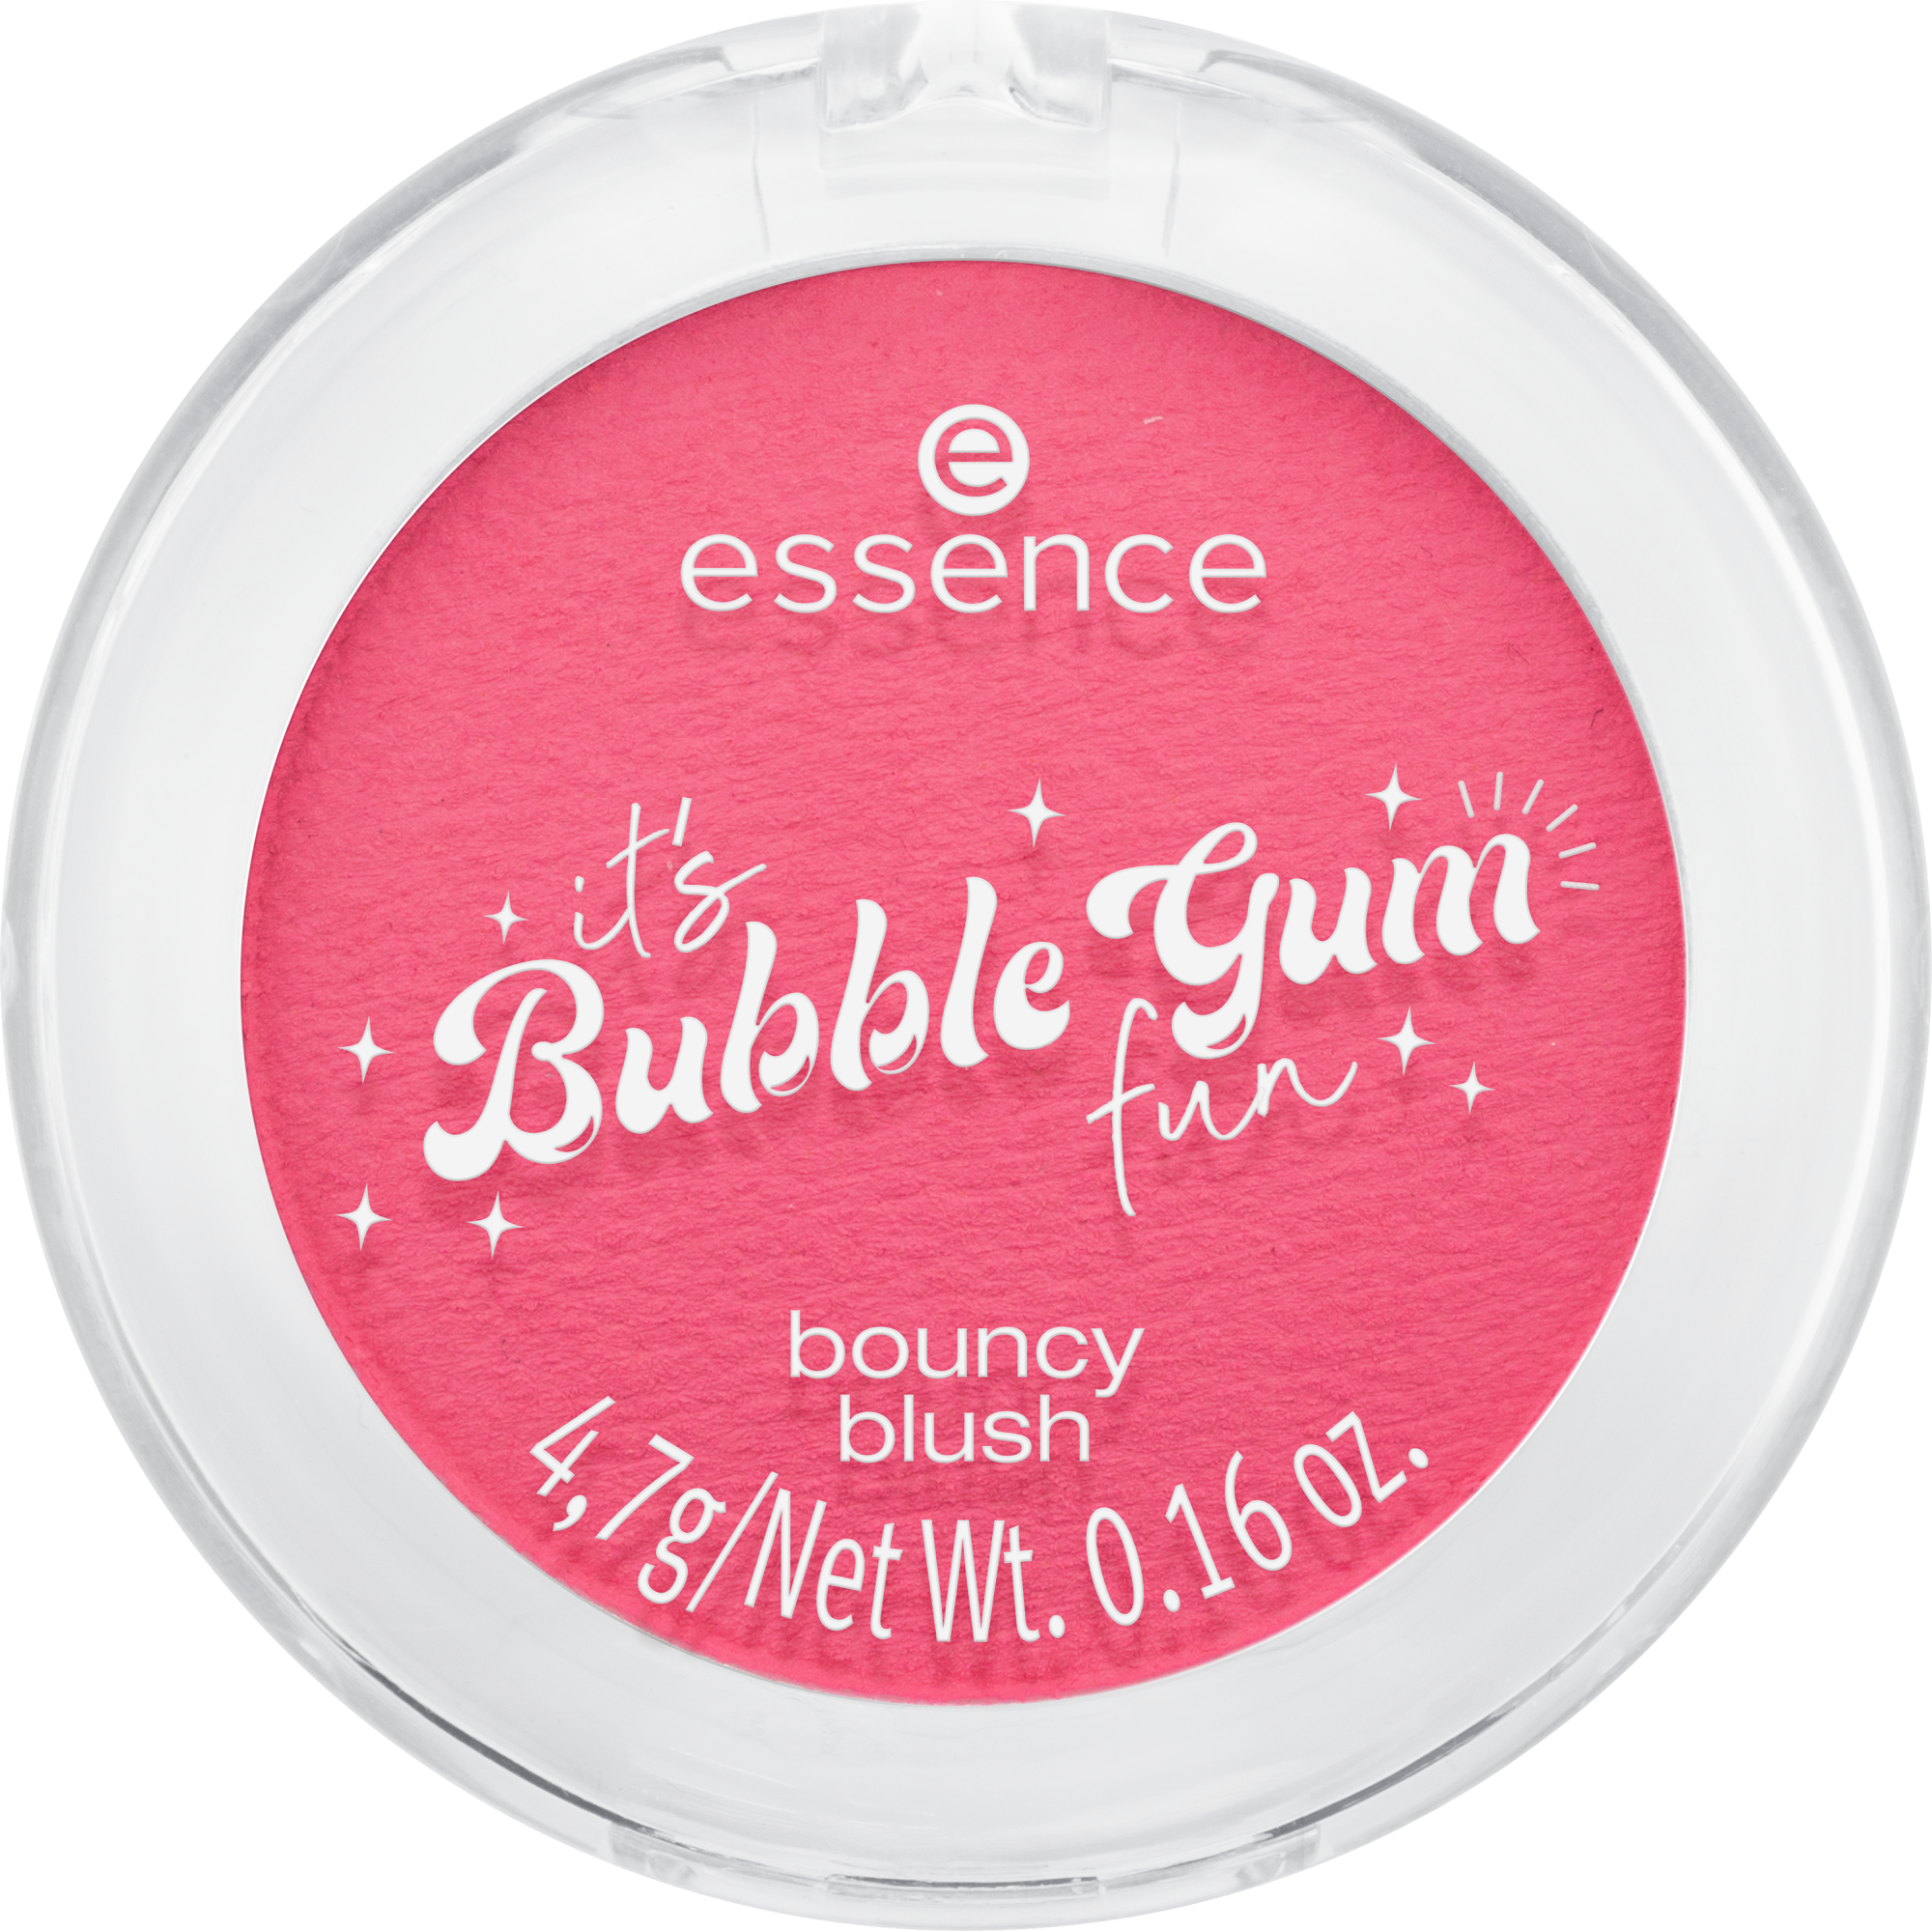 it's Bubble Gum fun bouncy blush